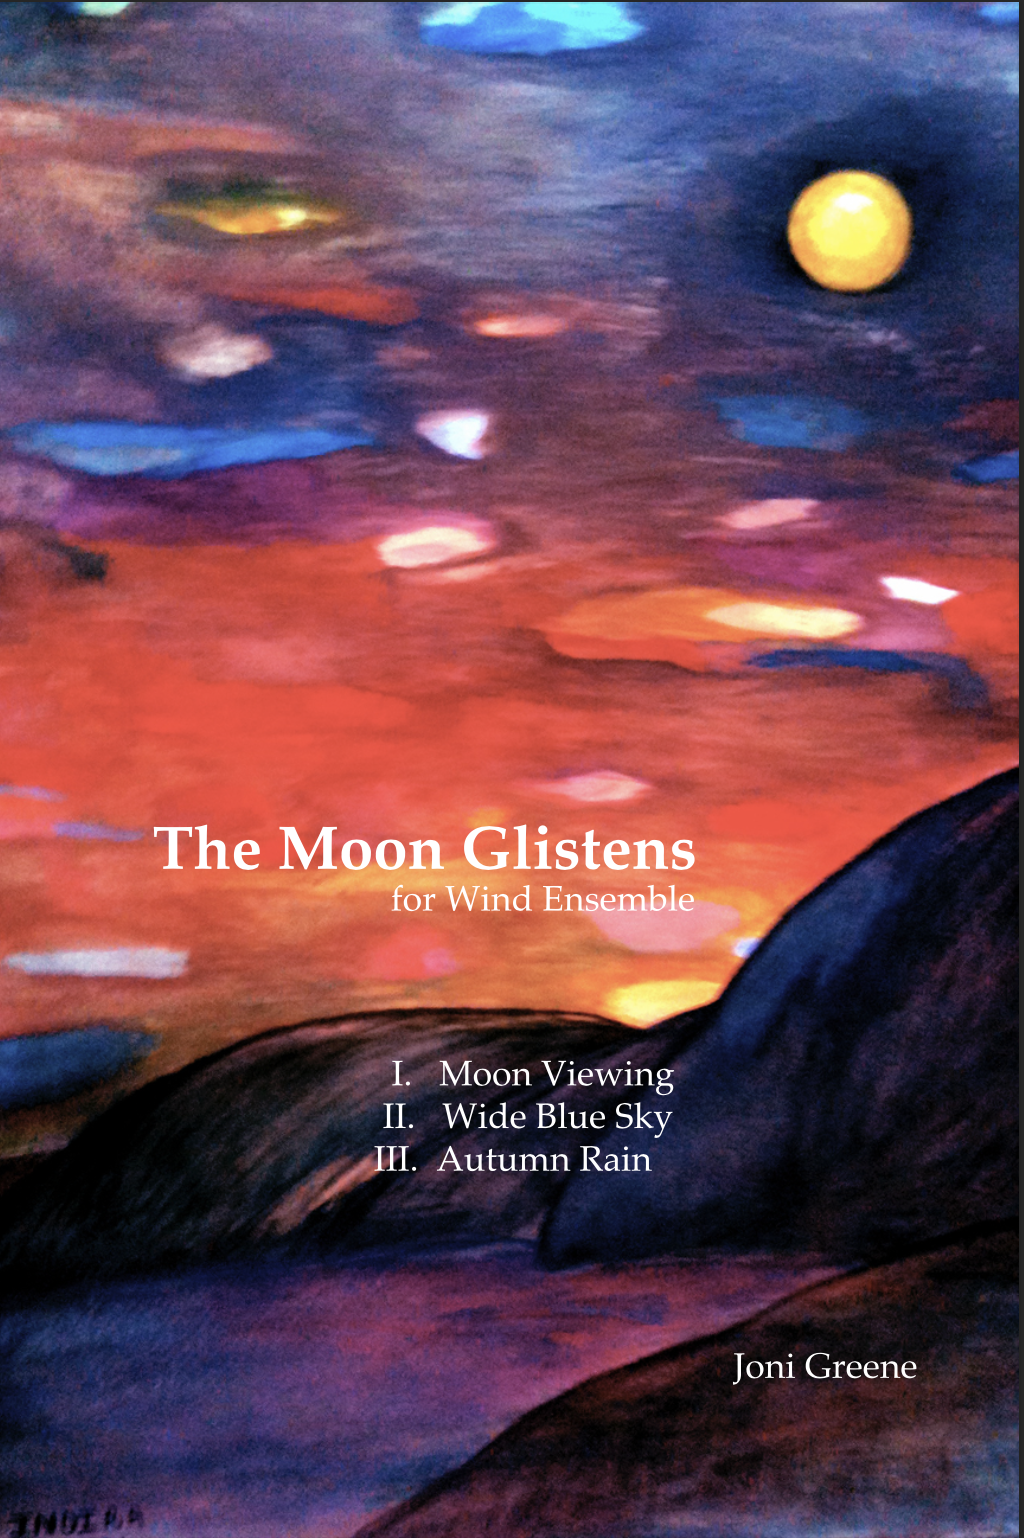 The Moon Glistens by Joni Greene